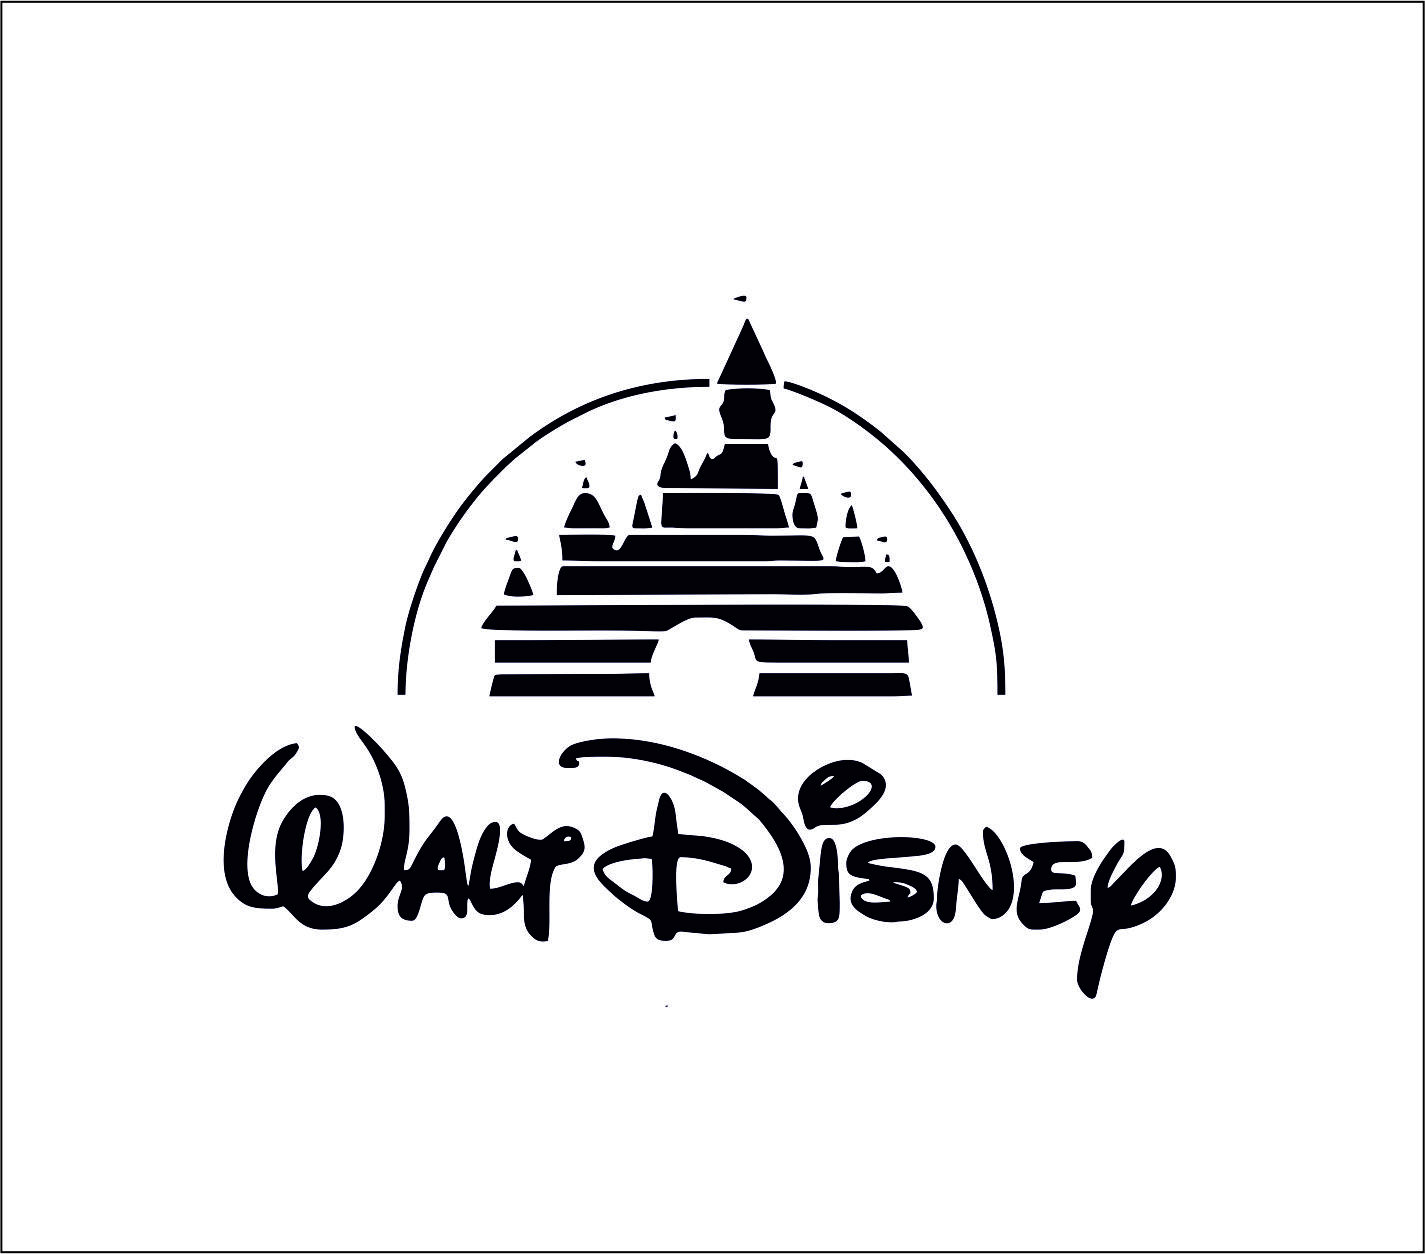 Walt Disney logo | SVGprinted